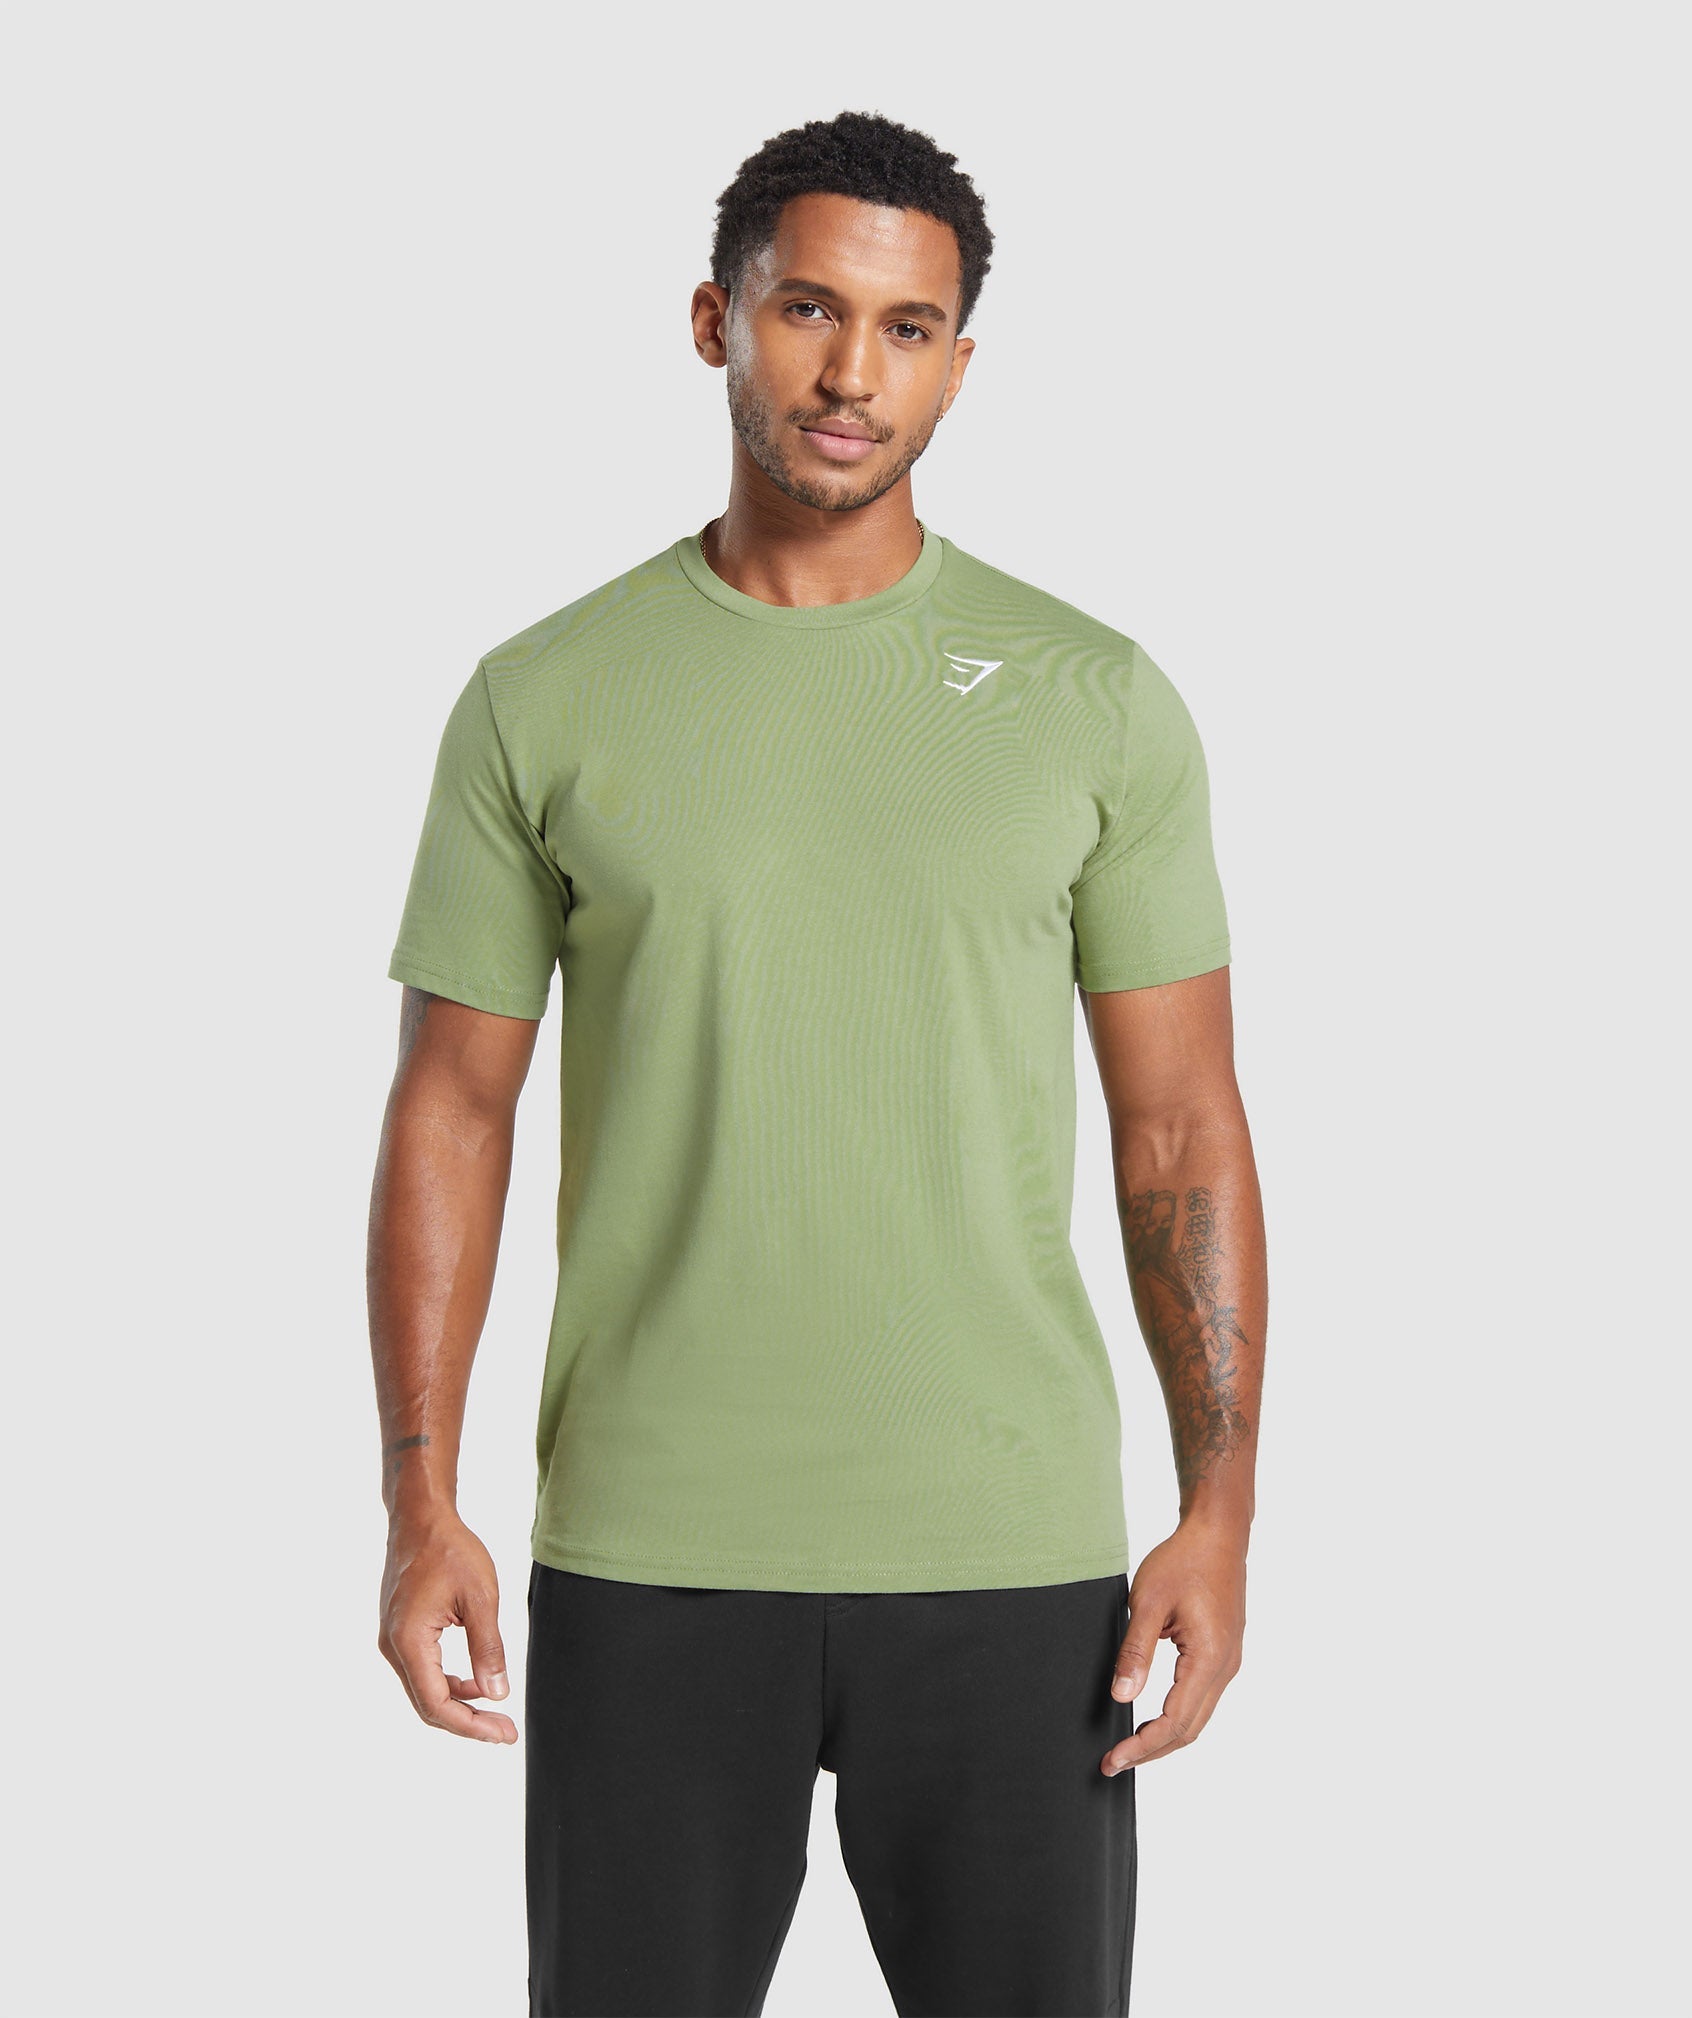 Crest T-Shirt in Natural Sage Green